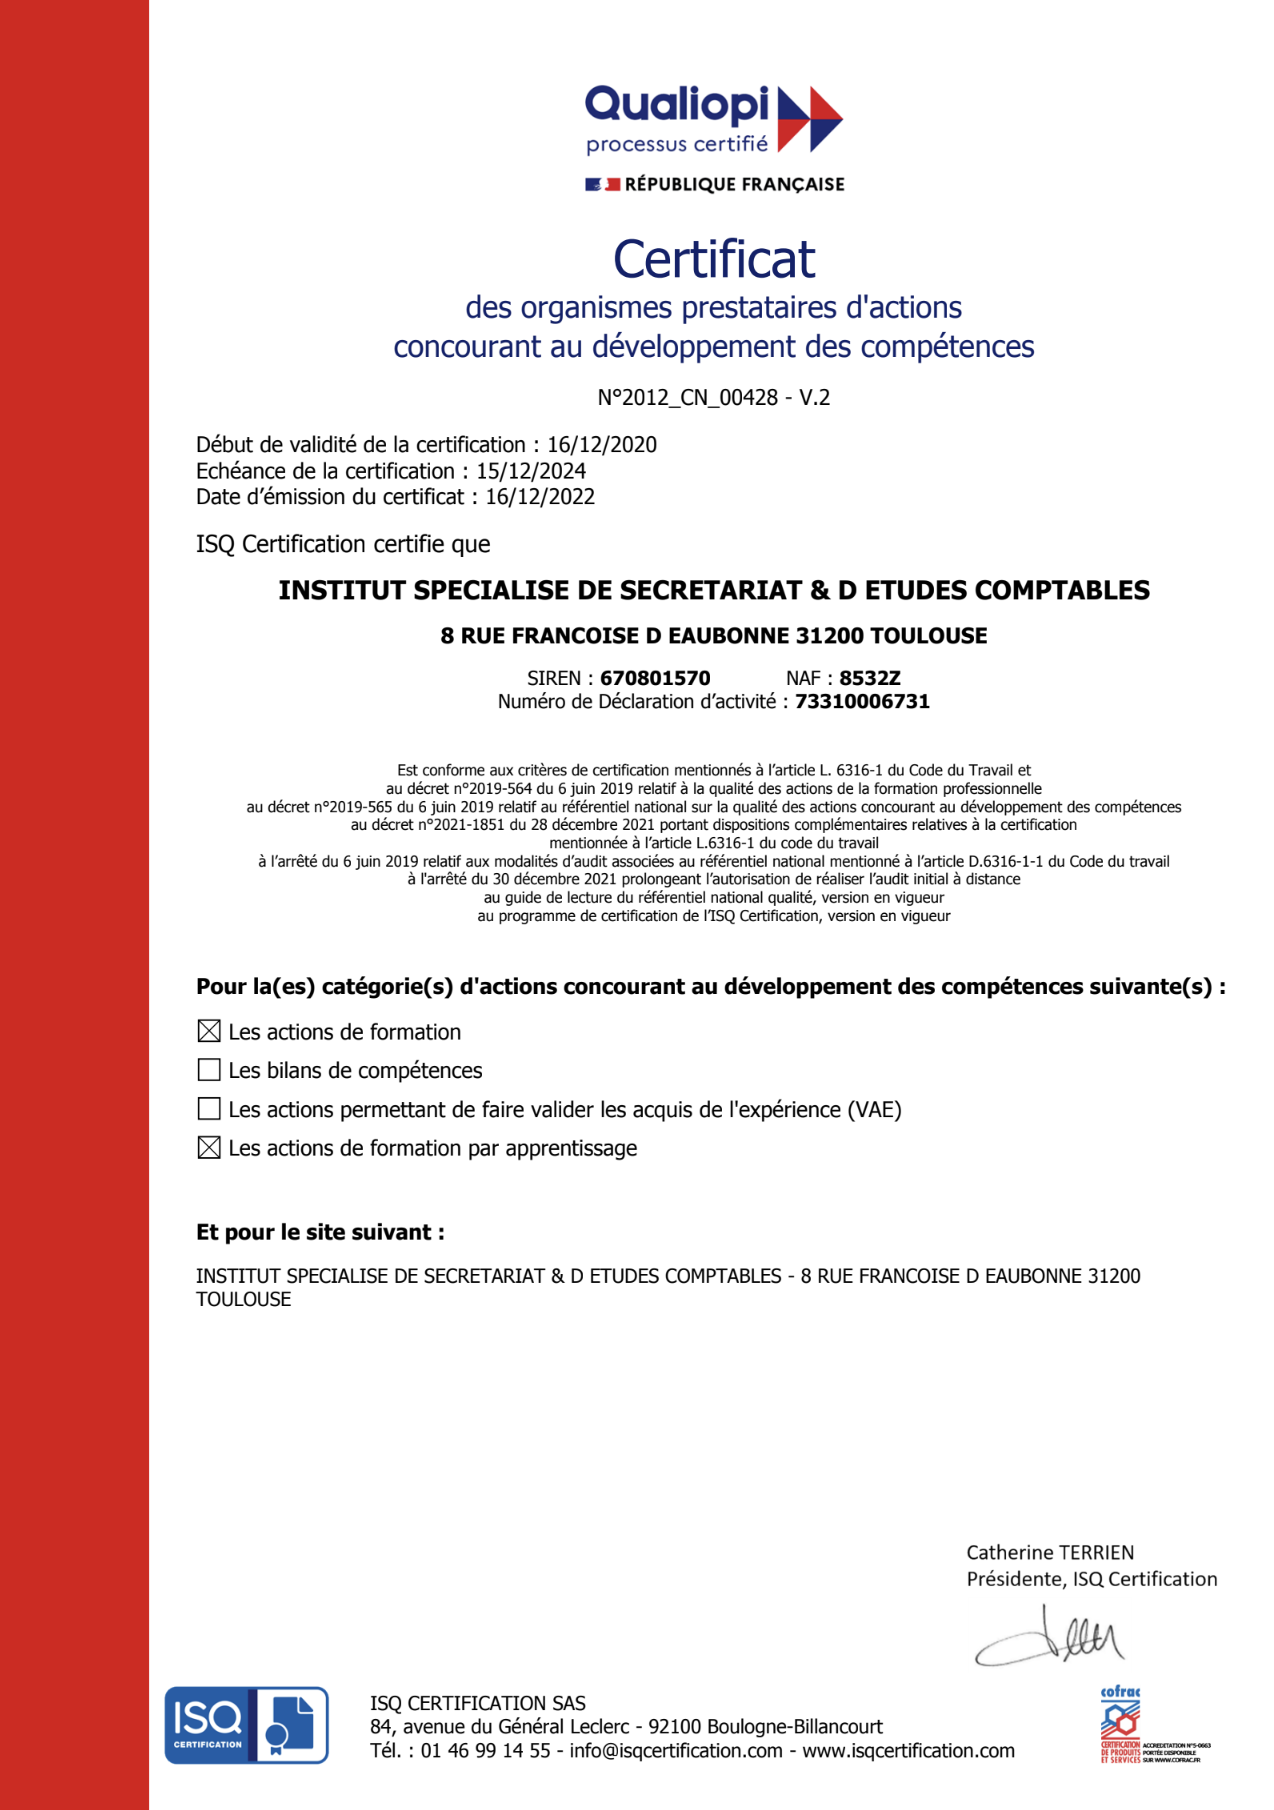 Certification-Qualiopi-Pigier-Toulouse